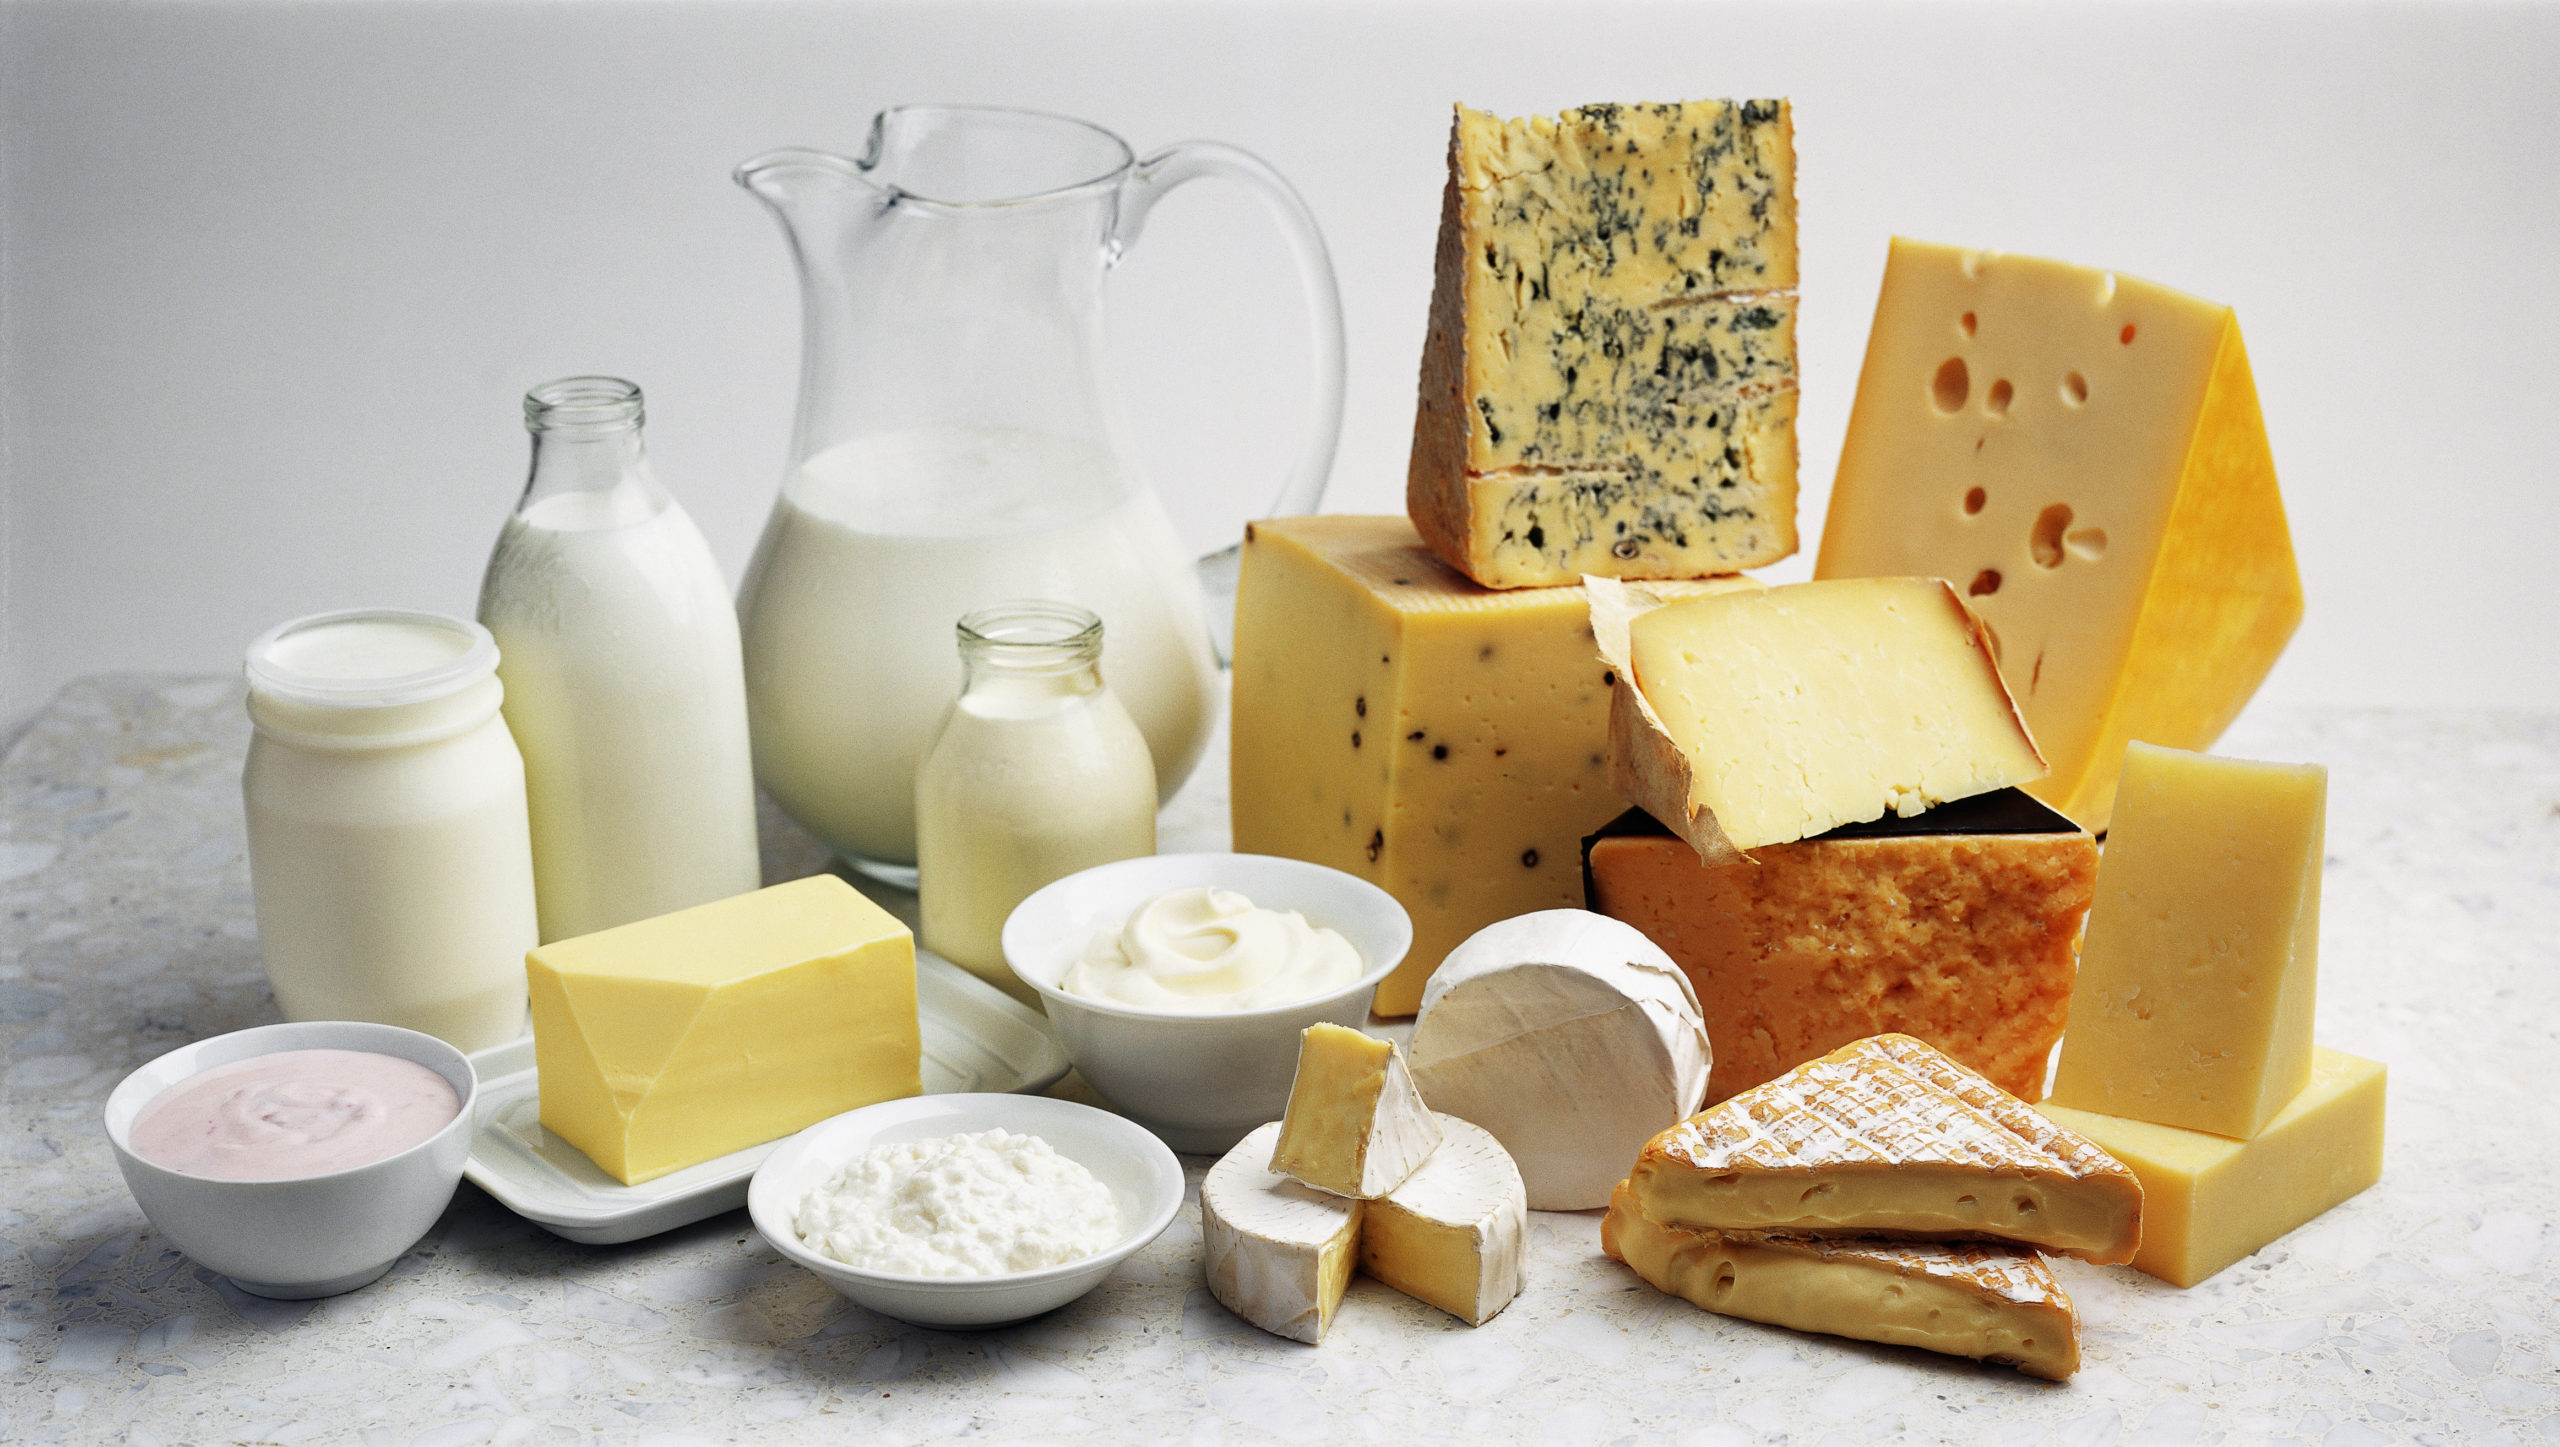 Cheese Ingredients